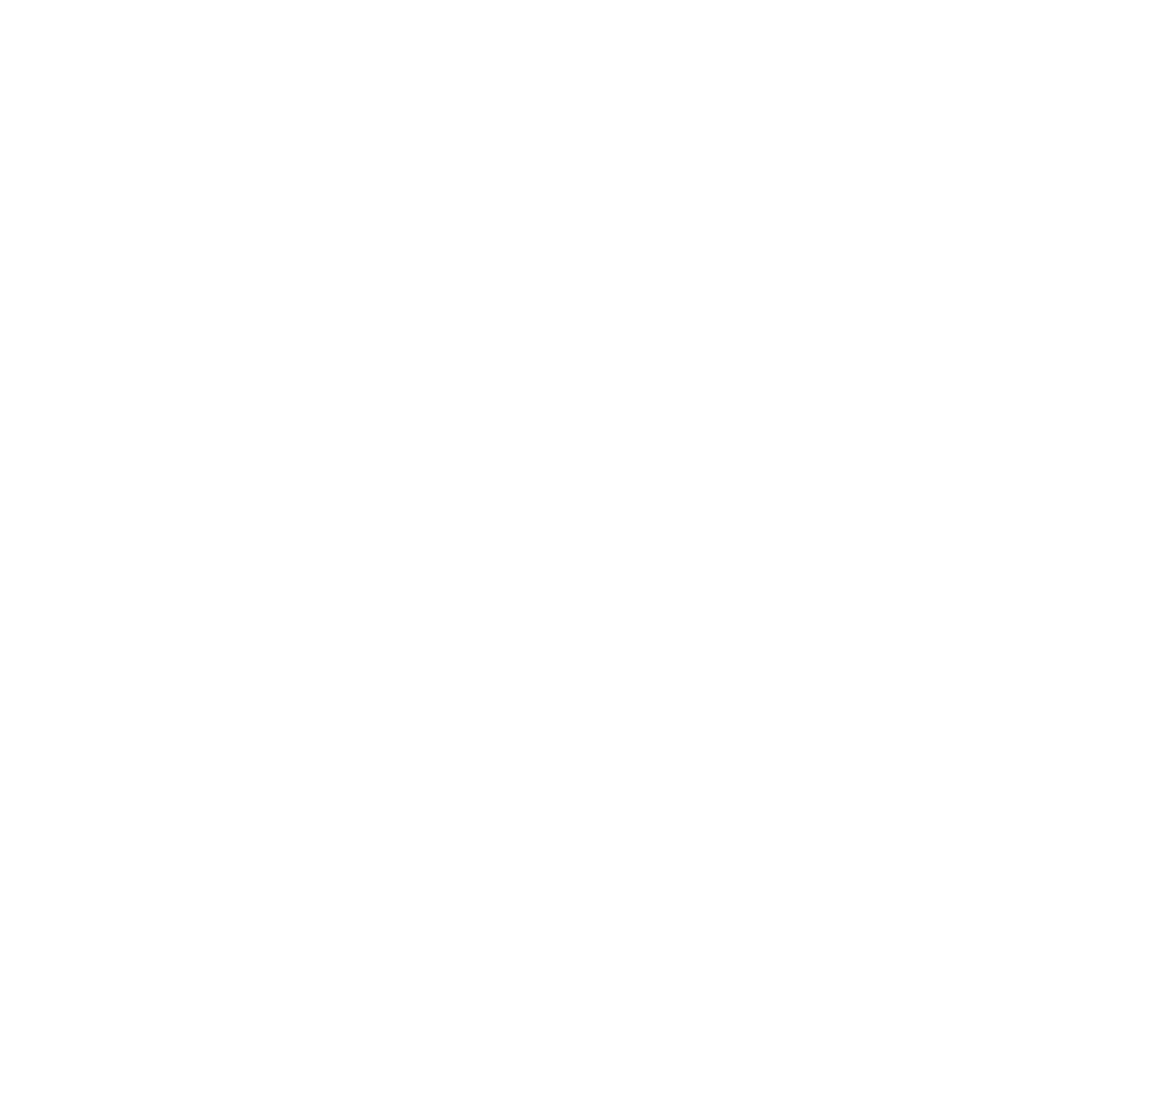 DC Tuning team